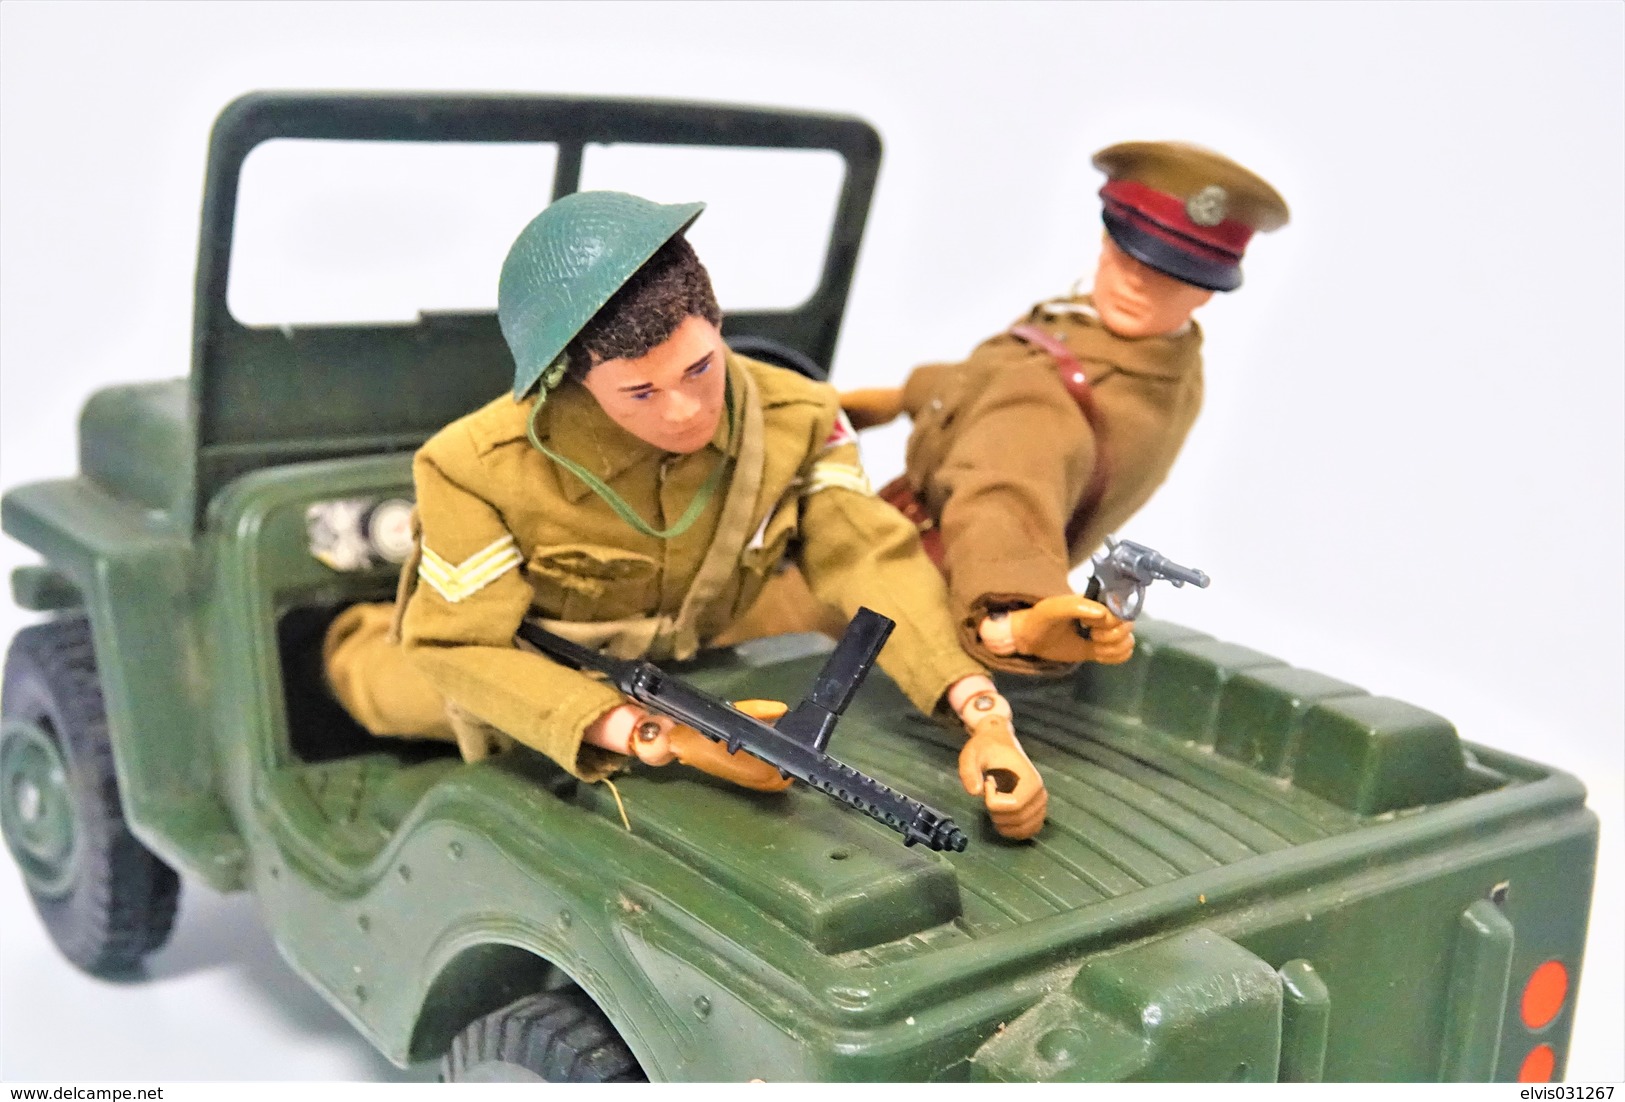 Vintage ACTION MAN : BRITISH ARMY OFFICER - Original Hasbro 1970's - Palitoy - GI JOE